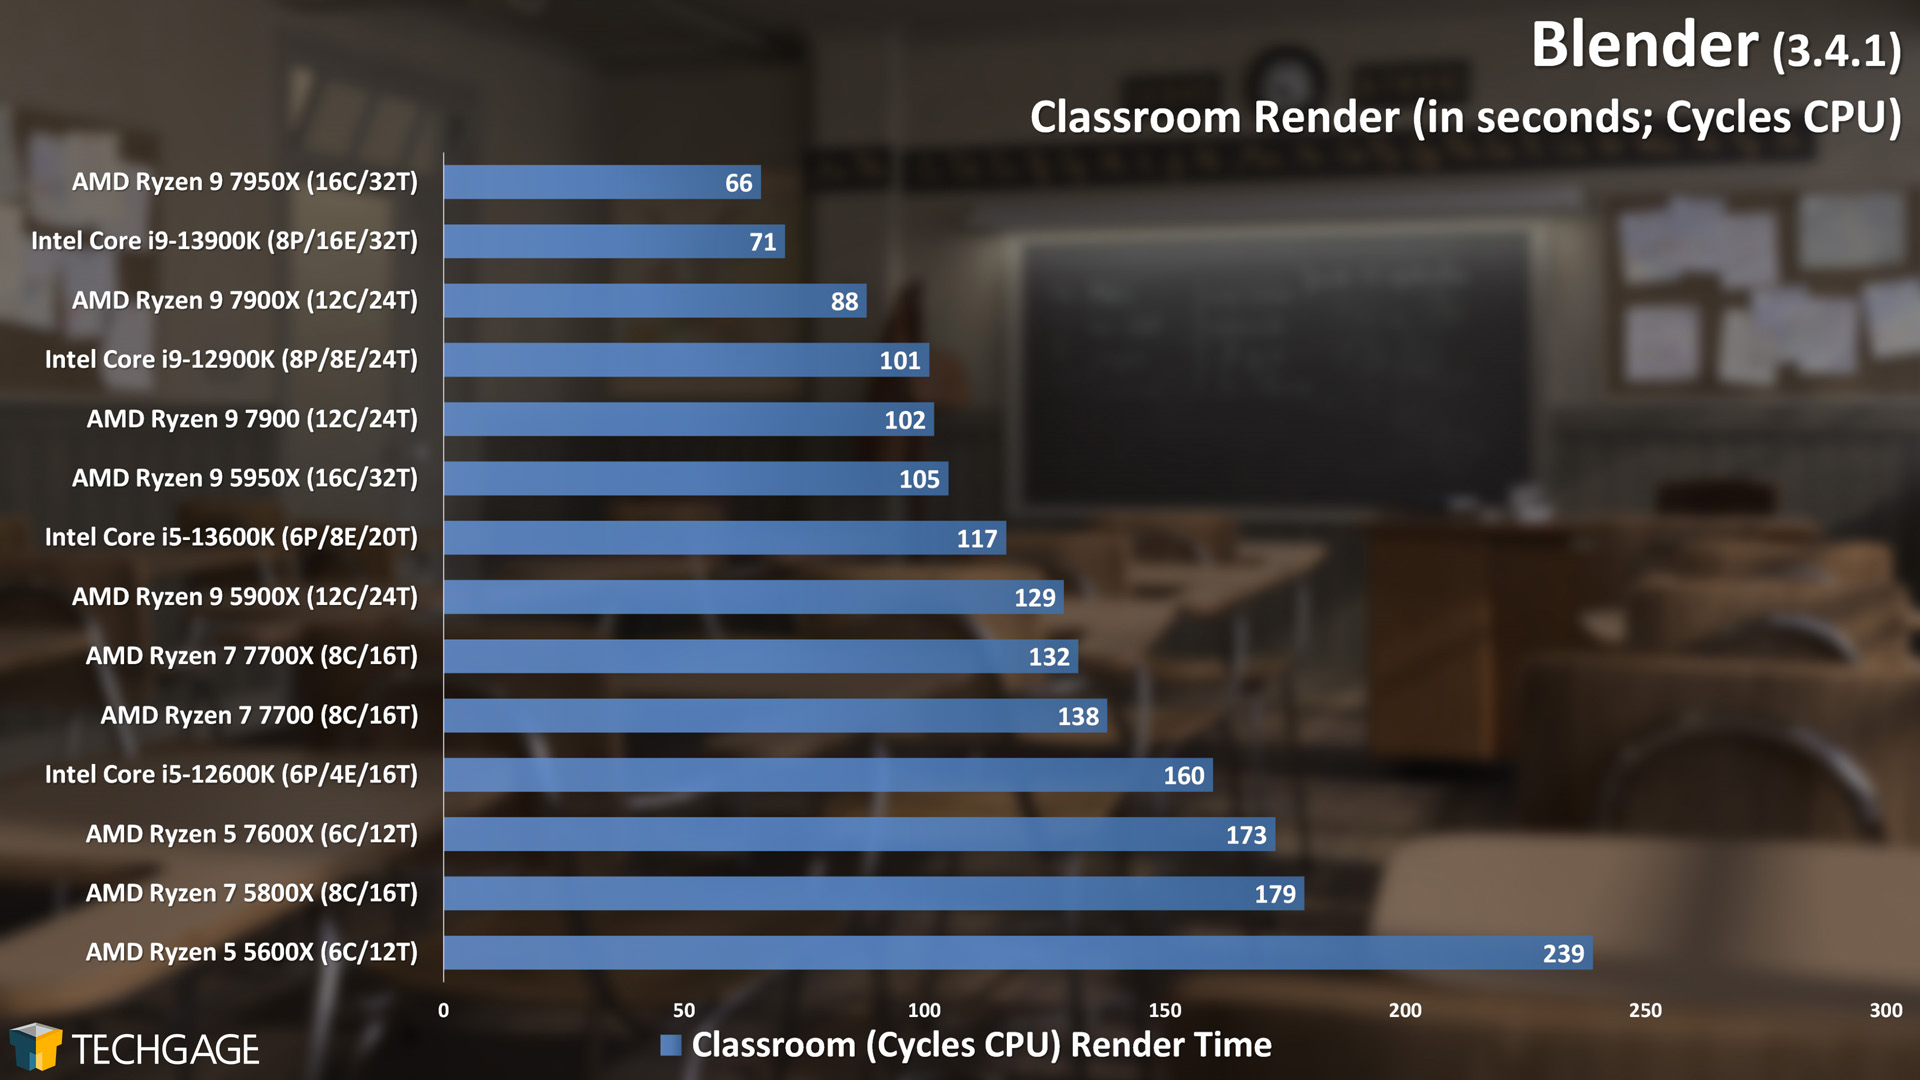 https://techgage.com/wp-content/uploads/2023/03/Blender-Cycles-CPU-Rendering-Performance-Classroom.jpg